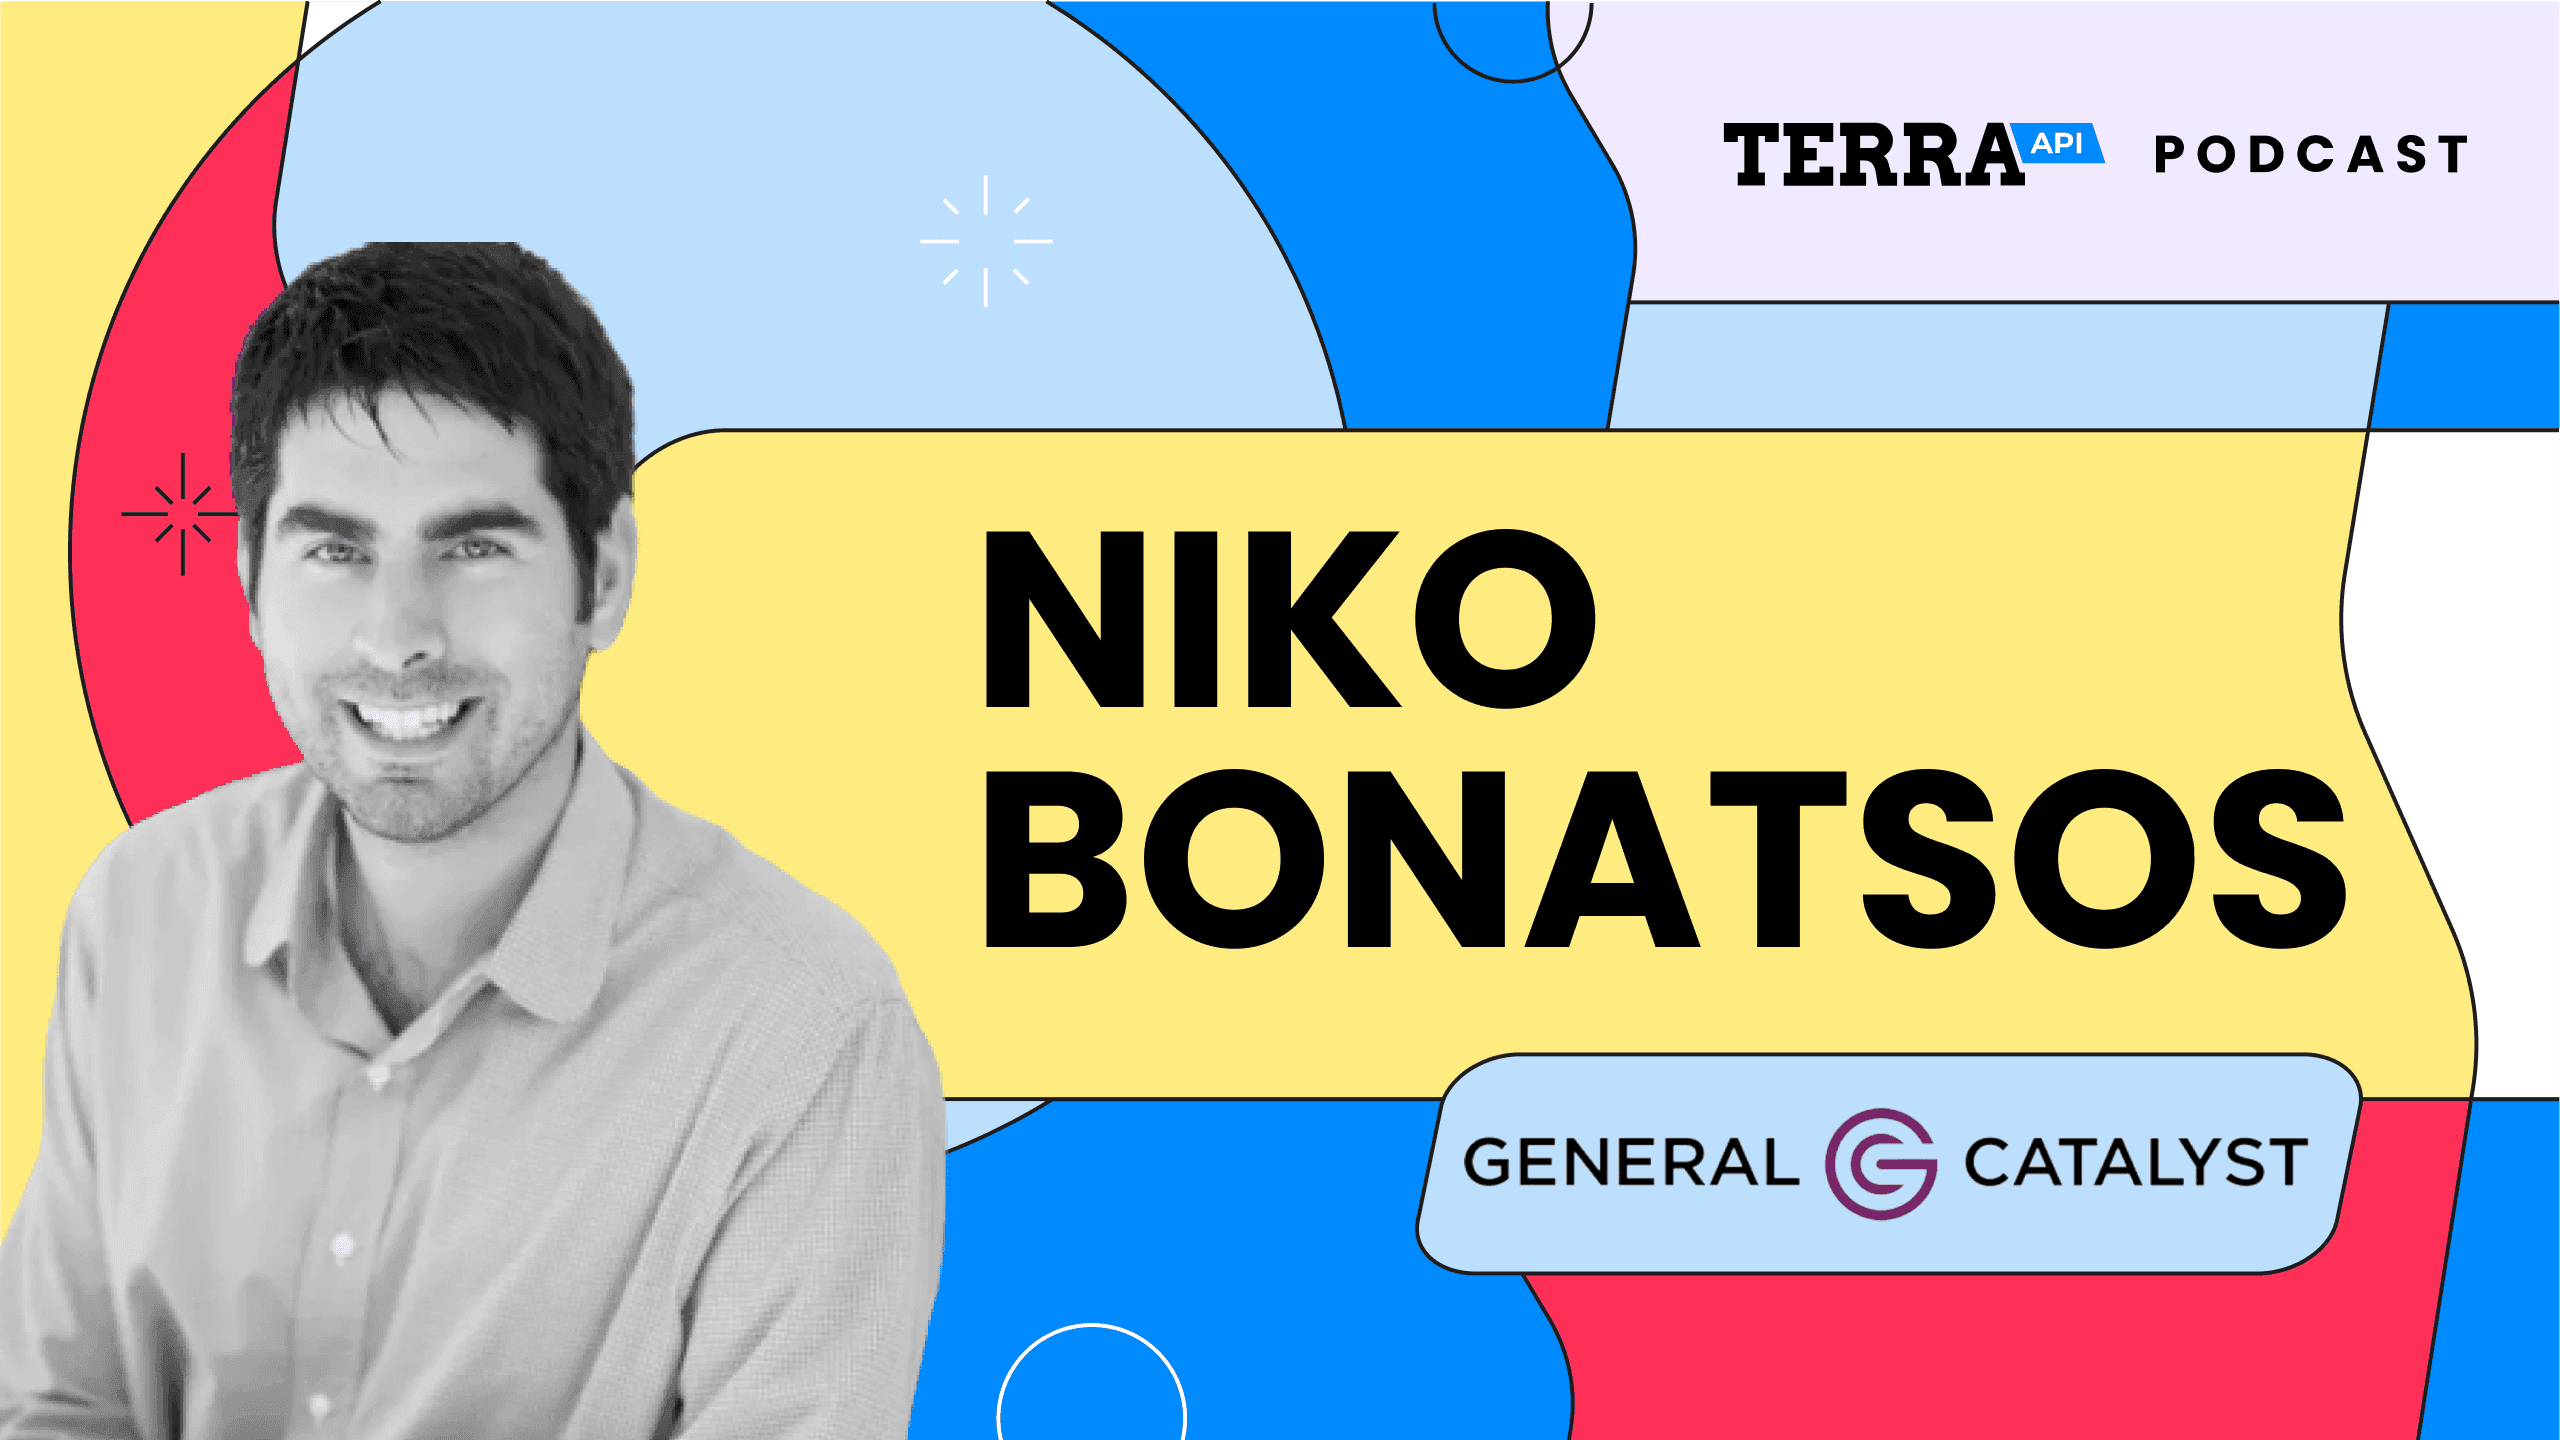 Niko Bonatsos: The Journey with General Catalyst